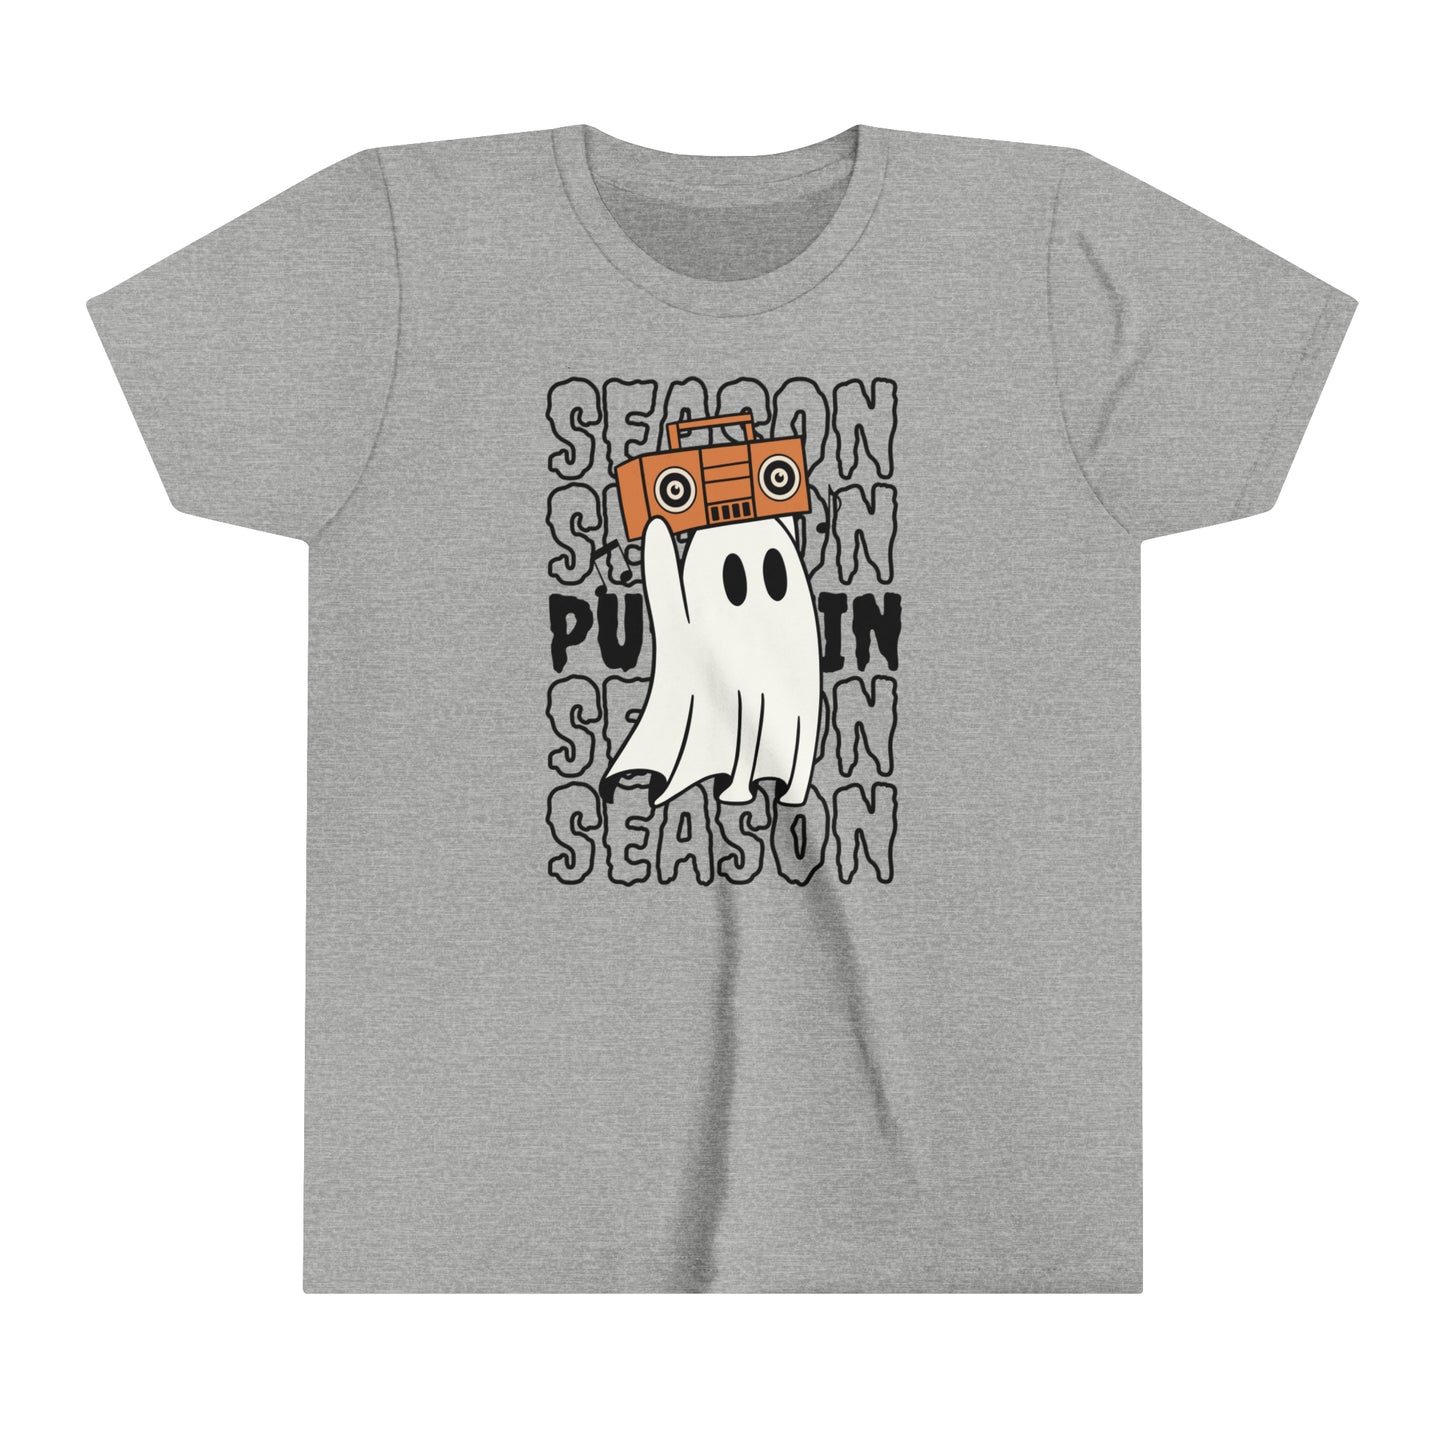 Camiseta de manga corta juvenil - Halloween - Pequeño fantasma - 15